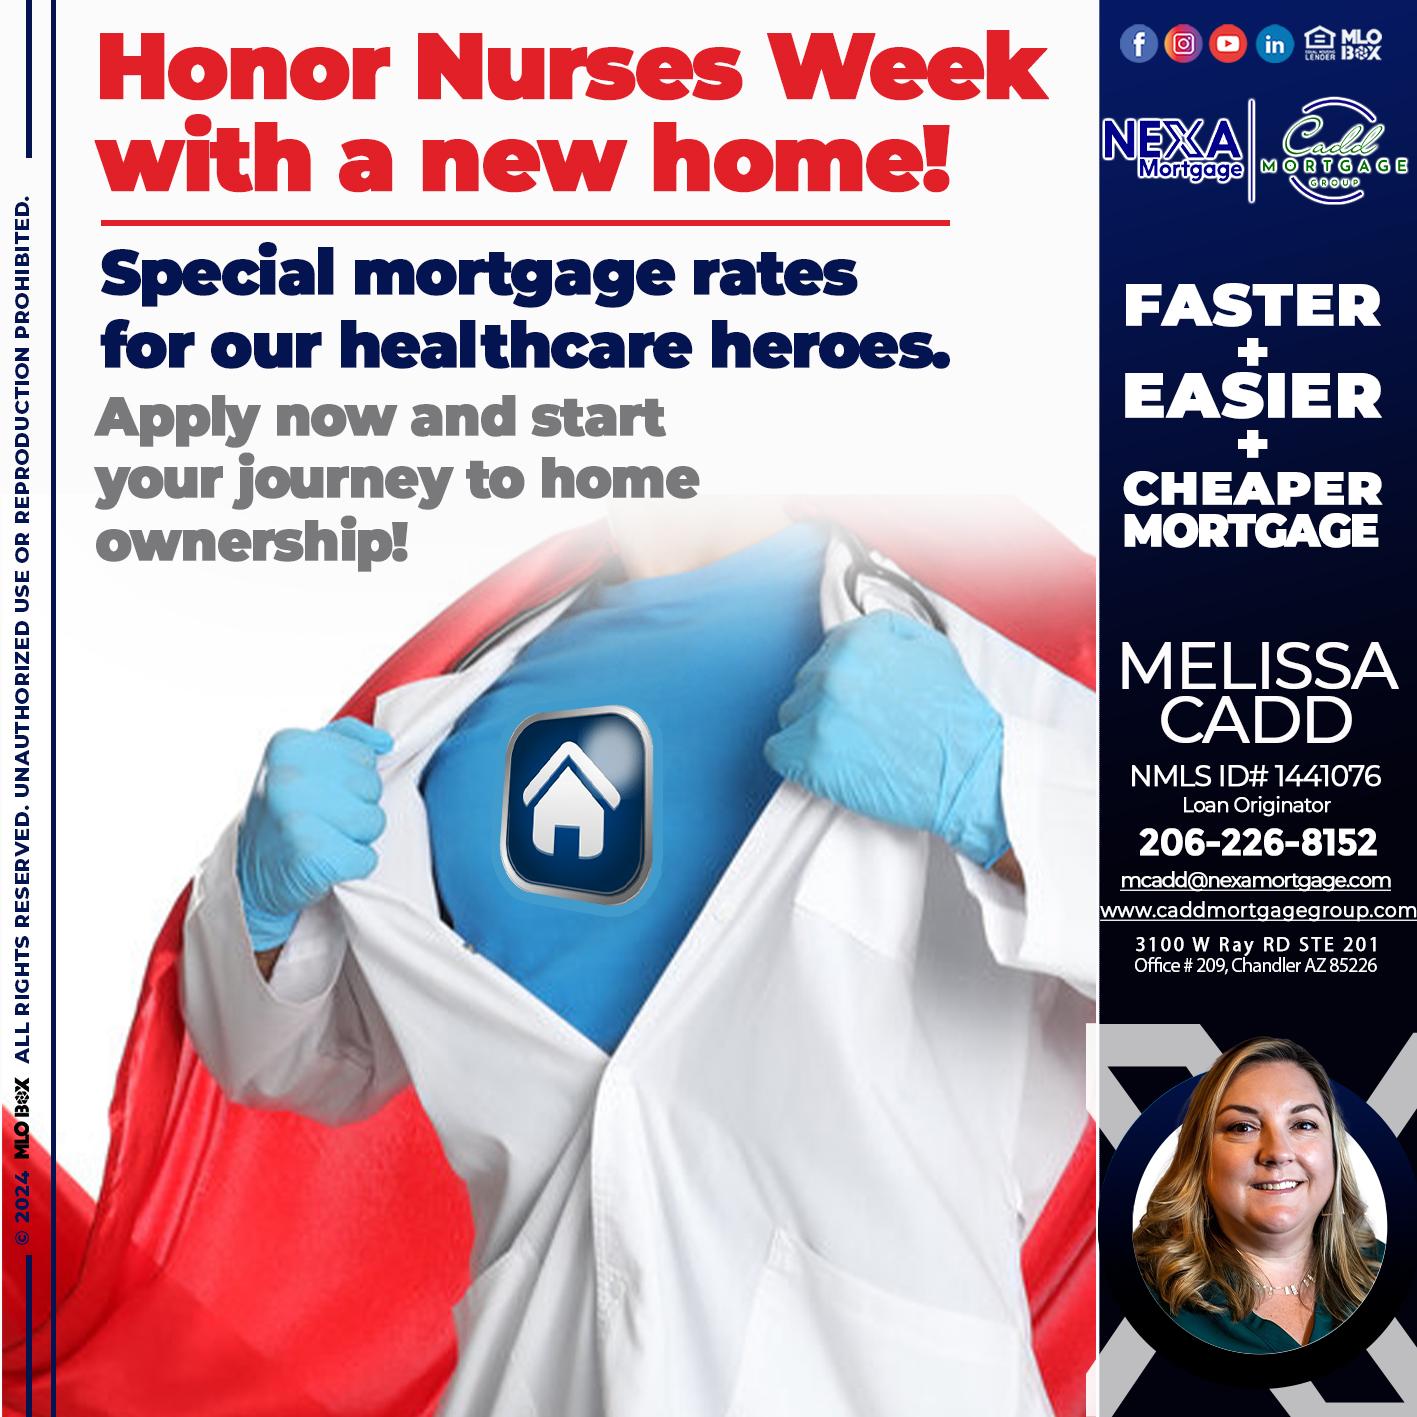 honor nurses - Melissa Cadd -Loan Originator